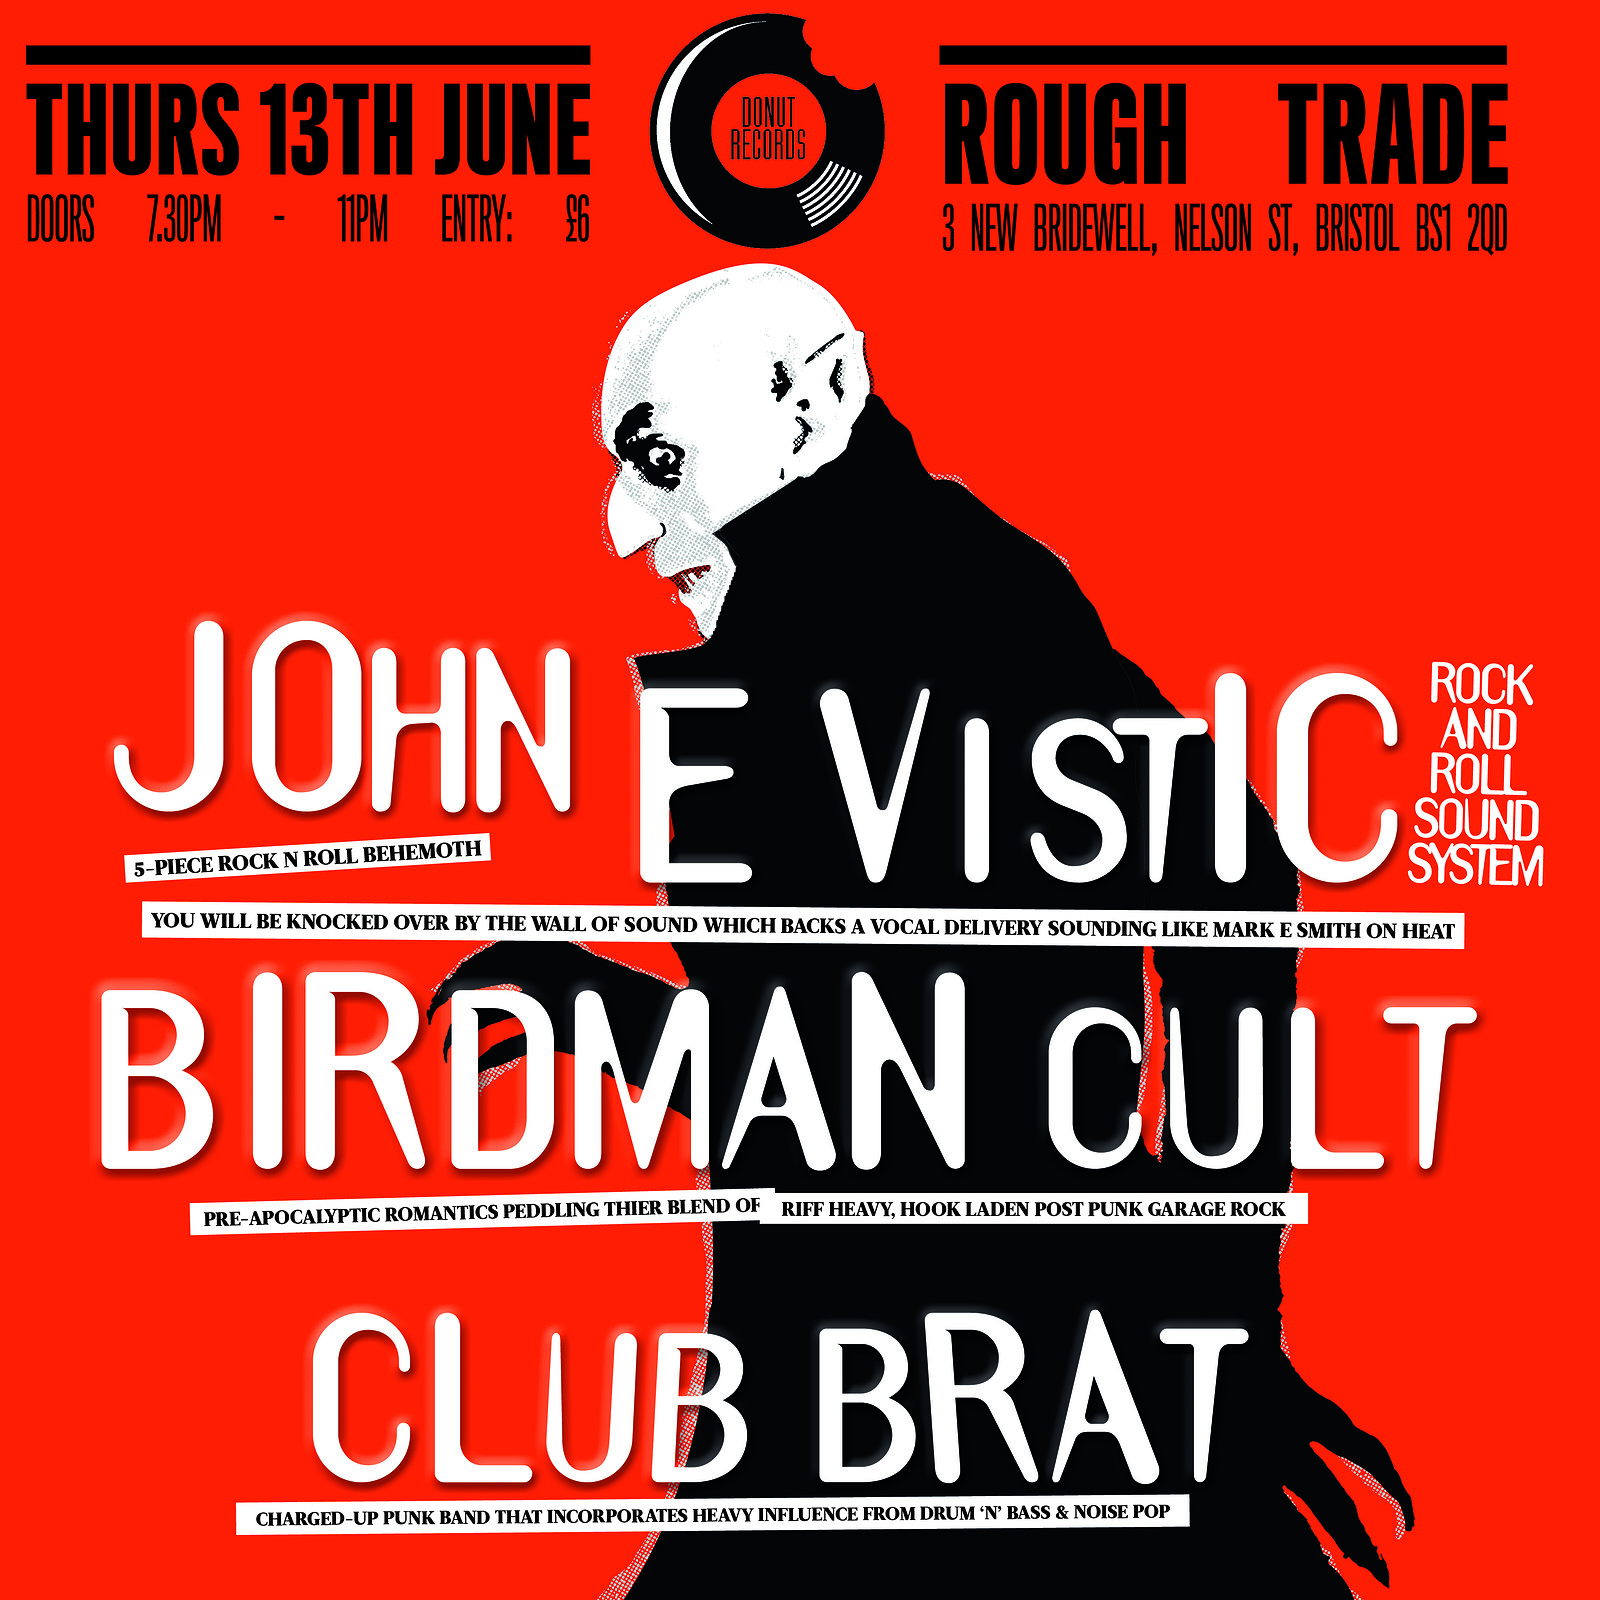 JOHN E VISTIC RNRSS / BIRDMAN CULT / CLUB BRAT at Rough Trade Bristol